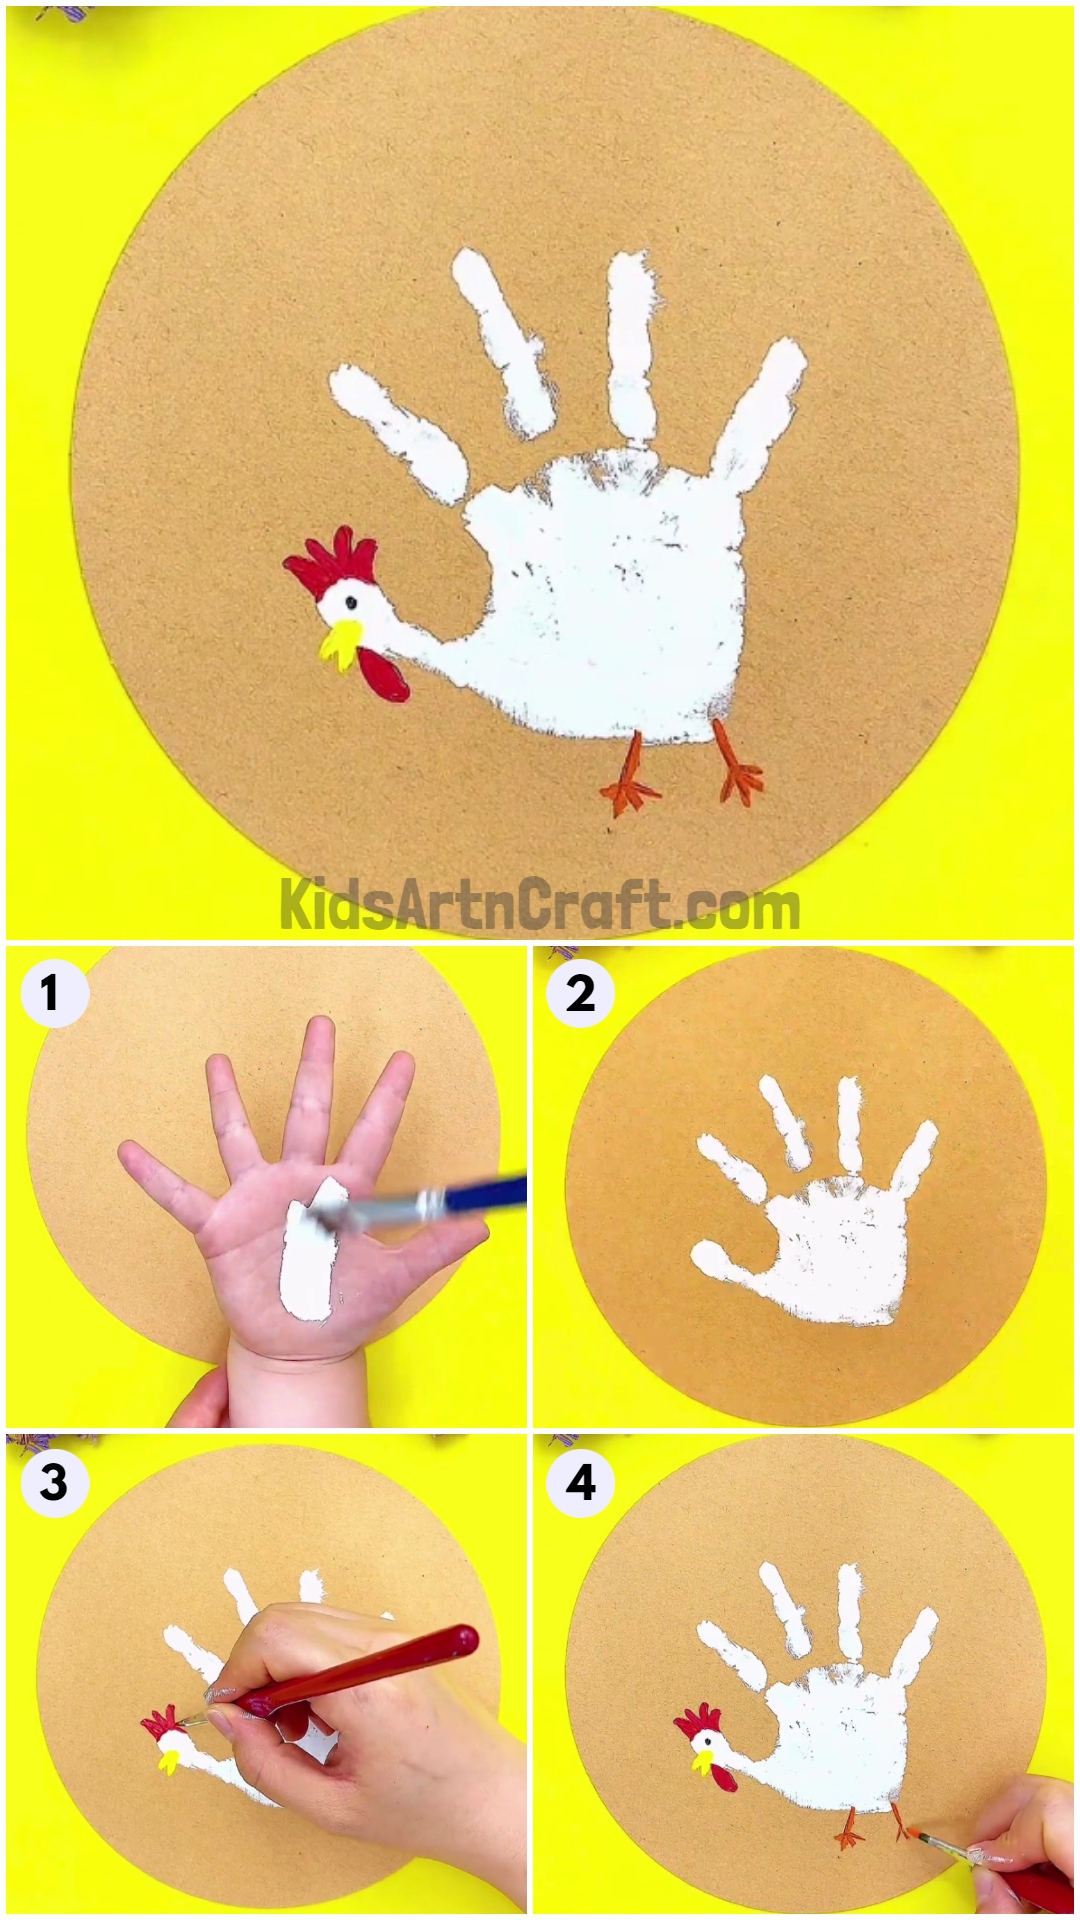 Easy To Make Hen Art Using Hand Impression Tutorial